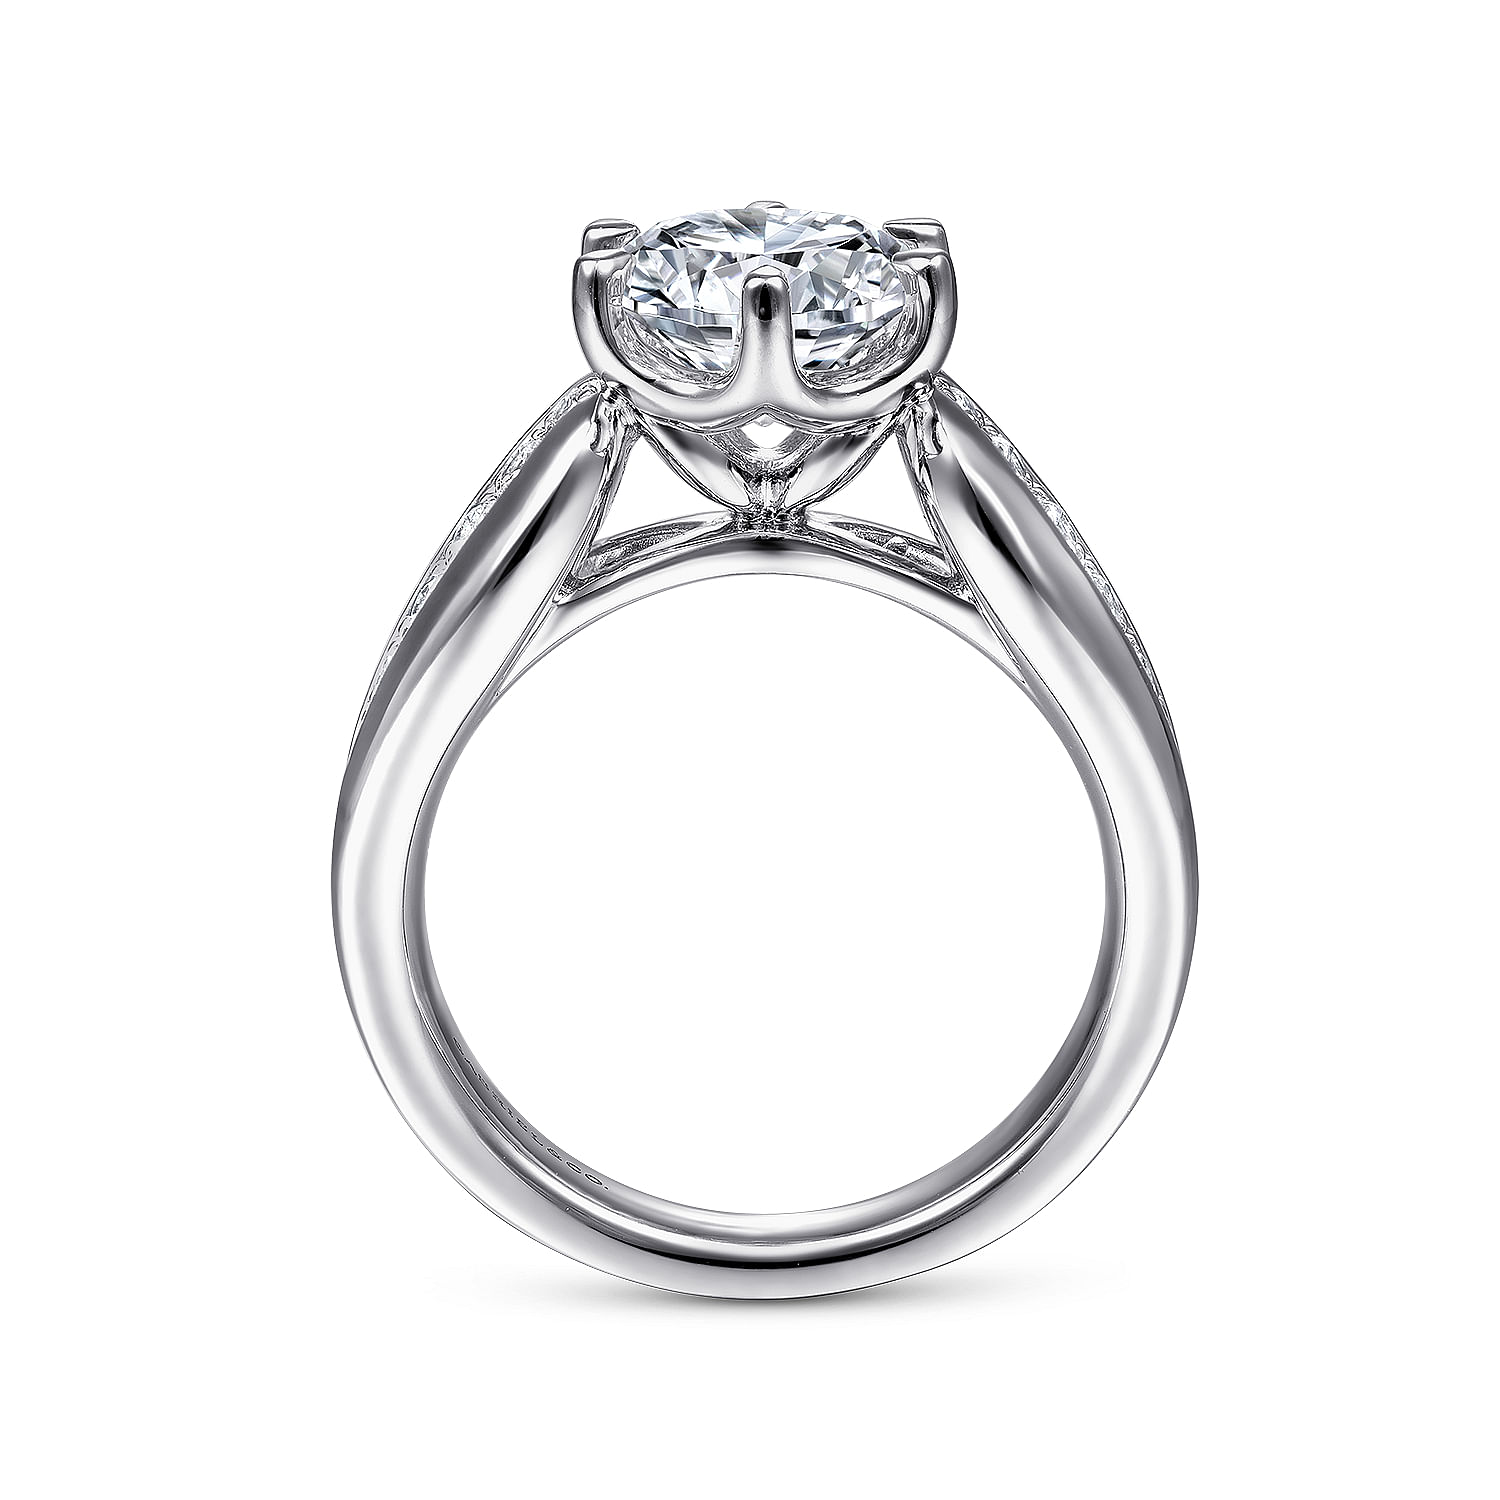 14K White Gold Wide Band Round Diamond Engagement Ring